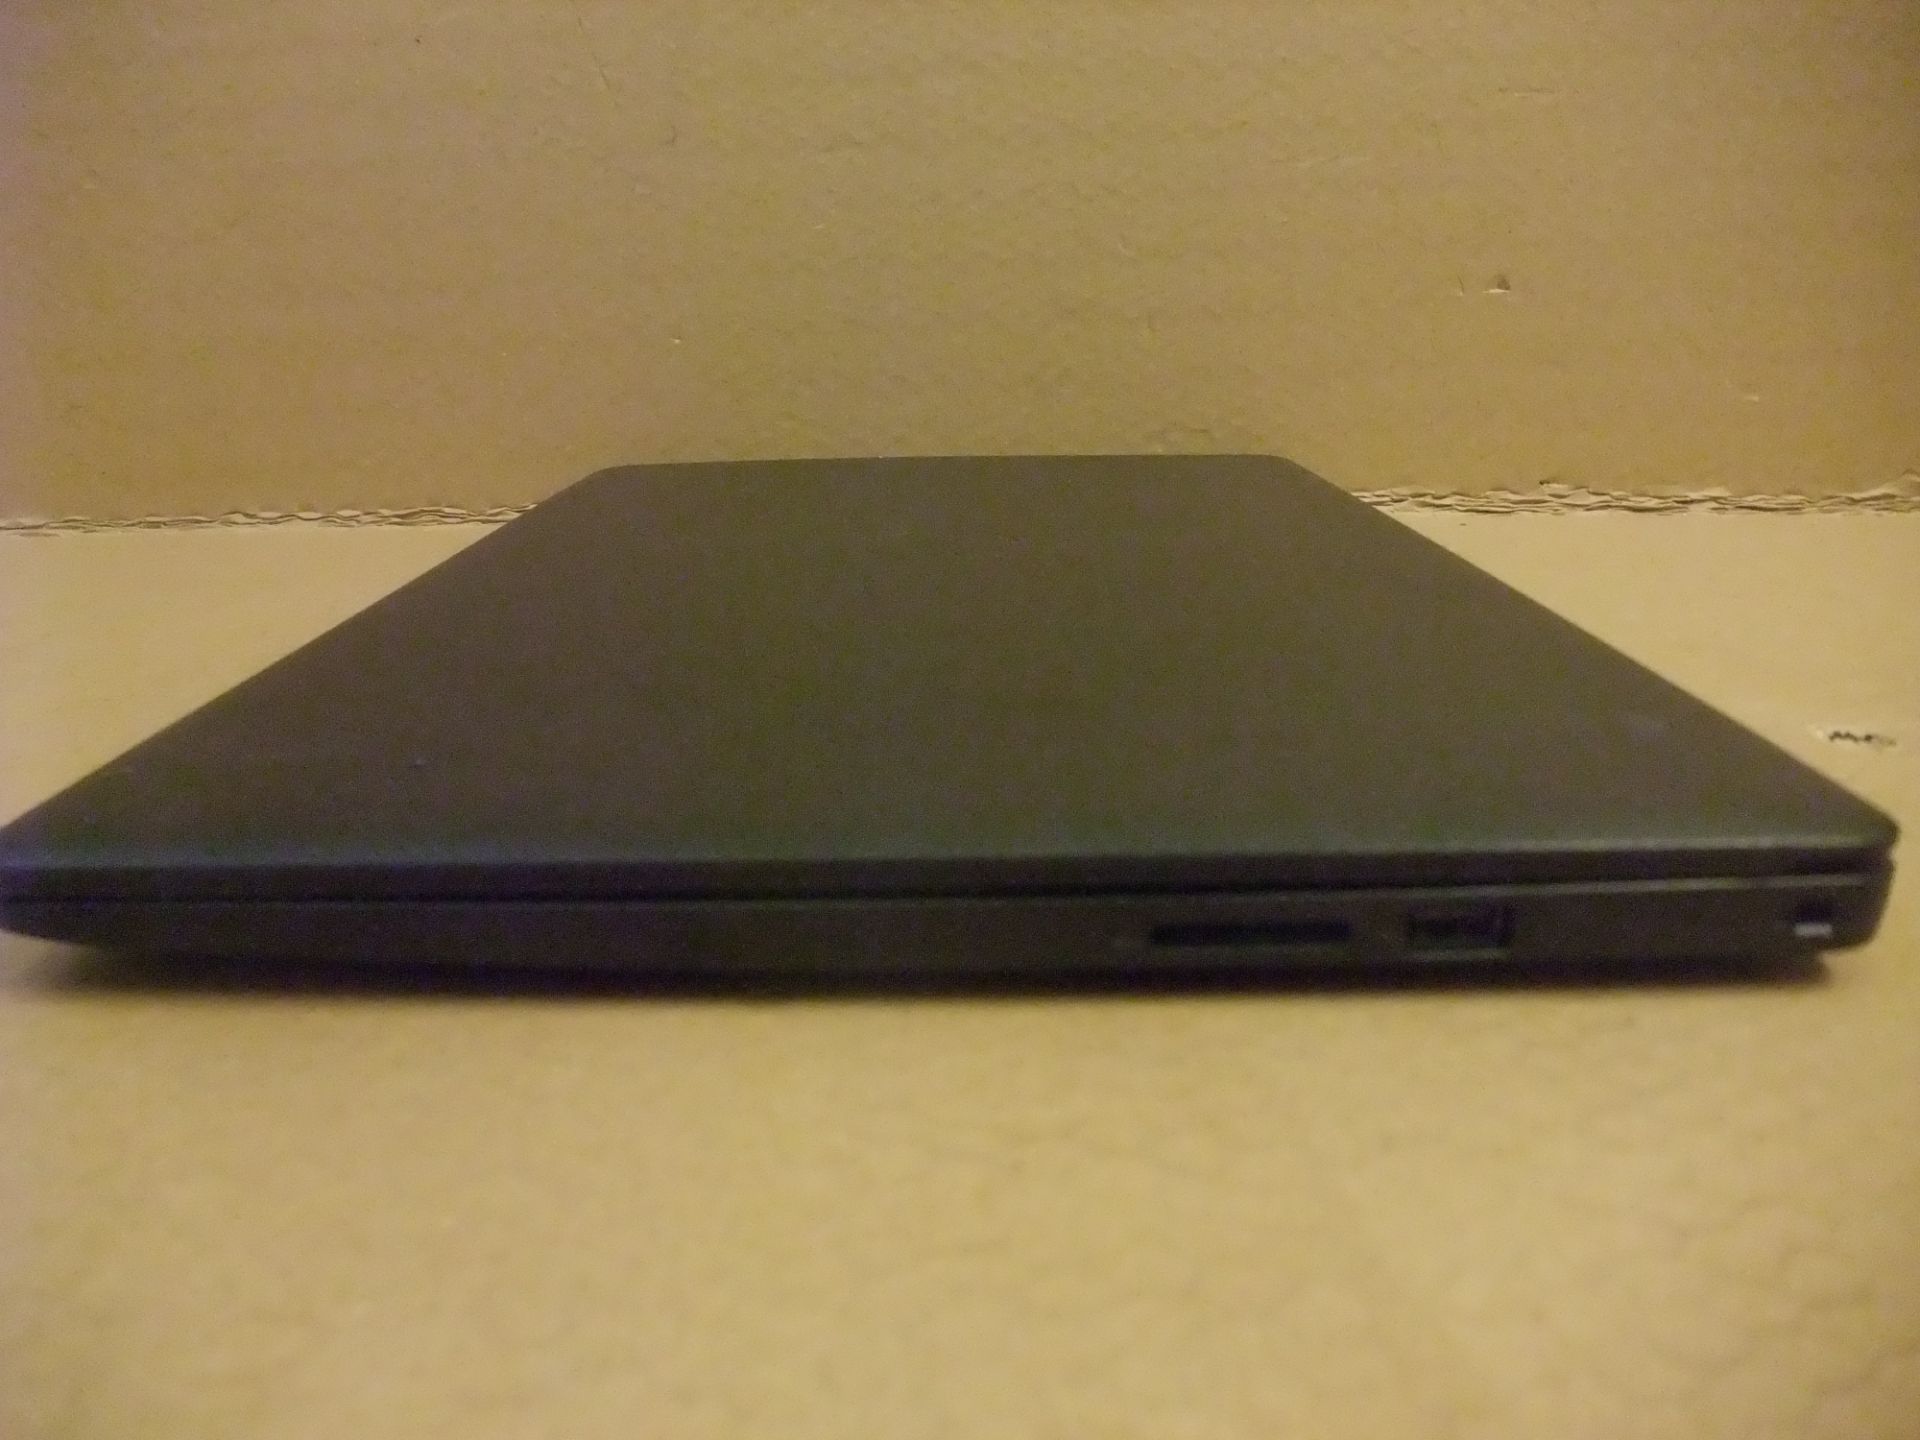 Dell Vostro 3590 Laptop - i5-10210U, 8Gb RAM, 256Gb M2 drive, Windows 10 Pro (PSU & power lead - Image 5 of 5